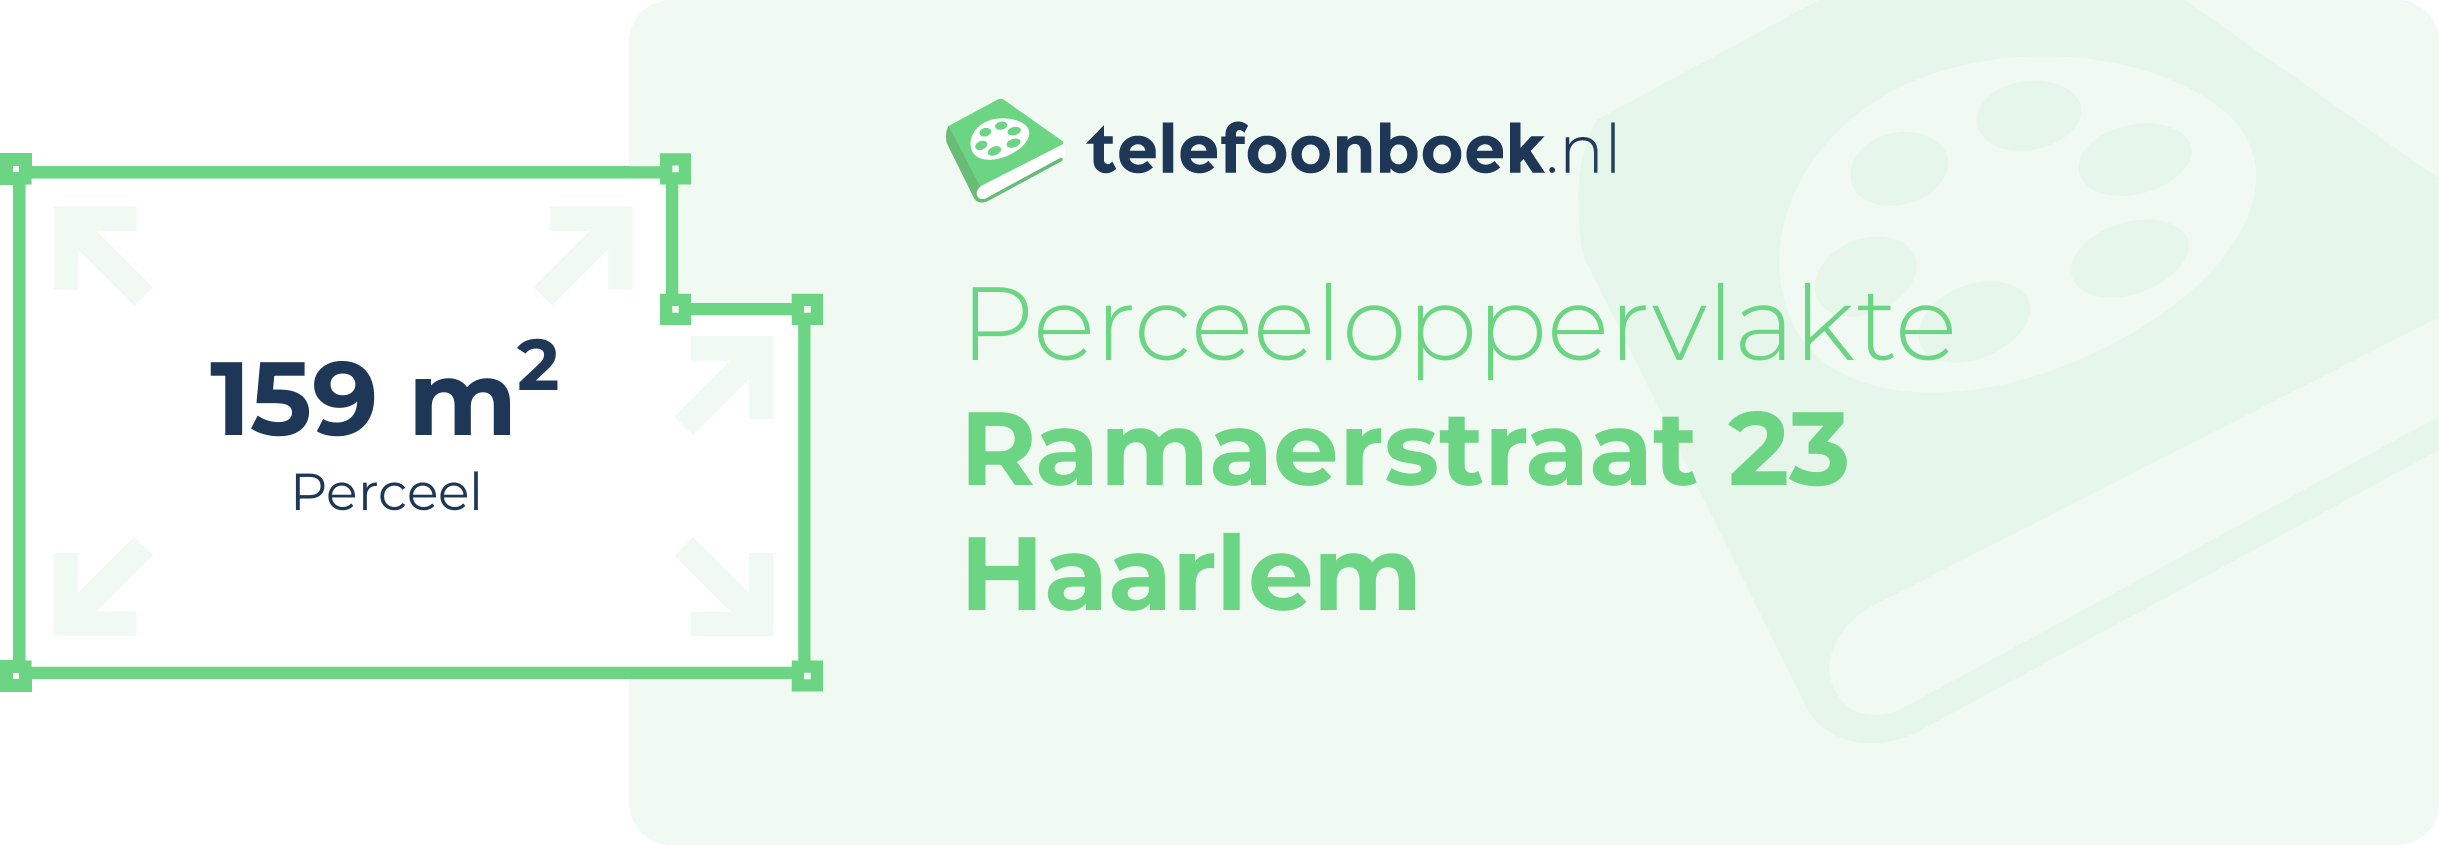 Perceeloppervlakte Ramaerstraat 23 Haarlem